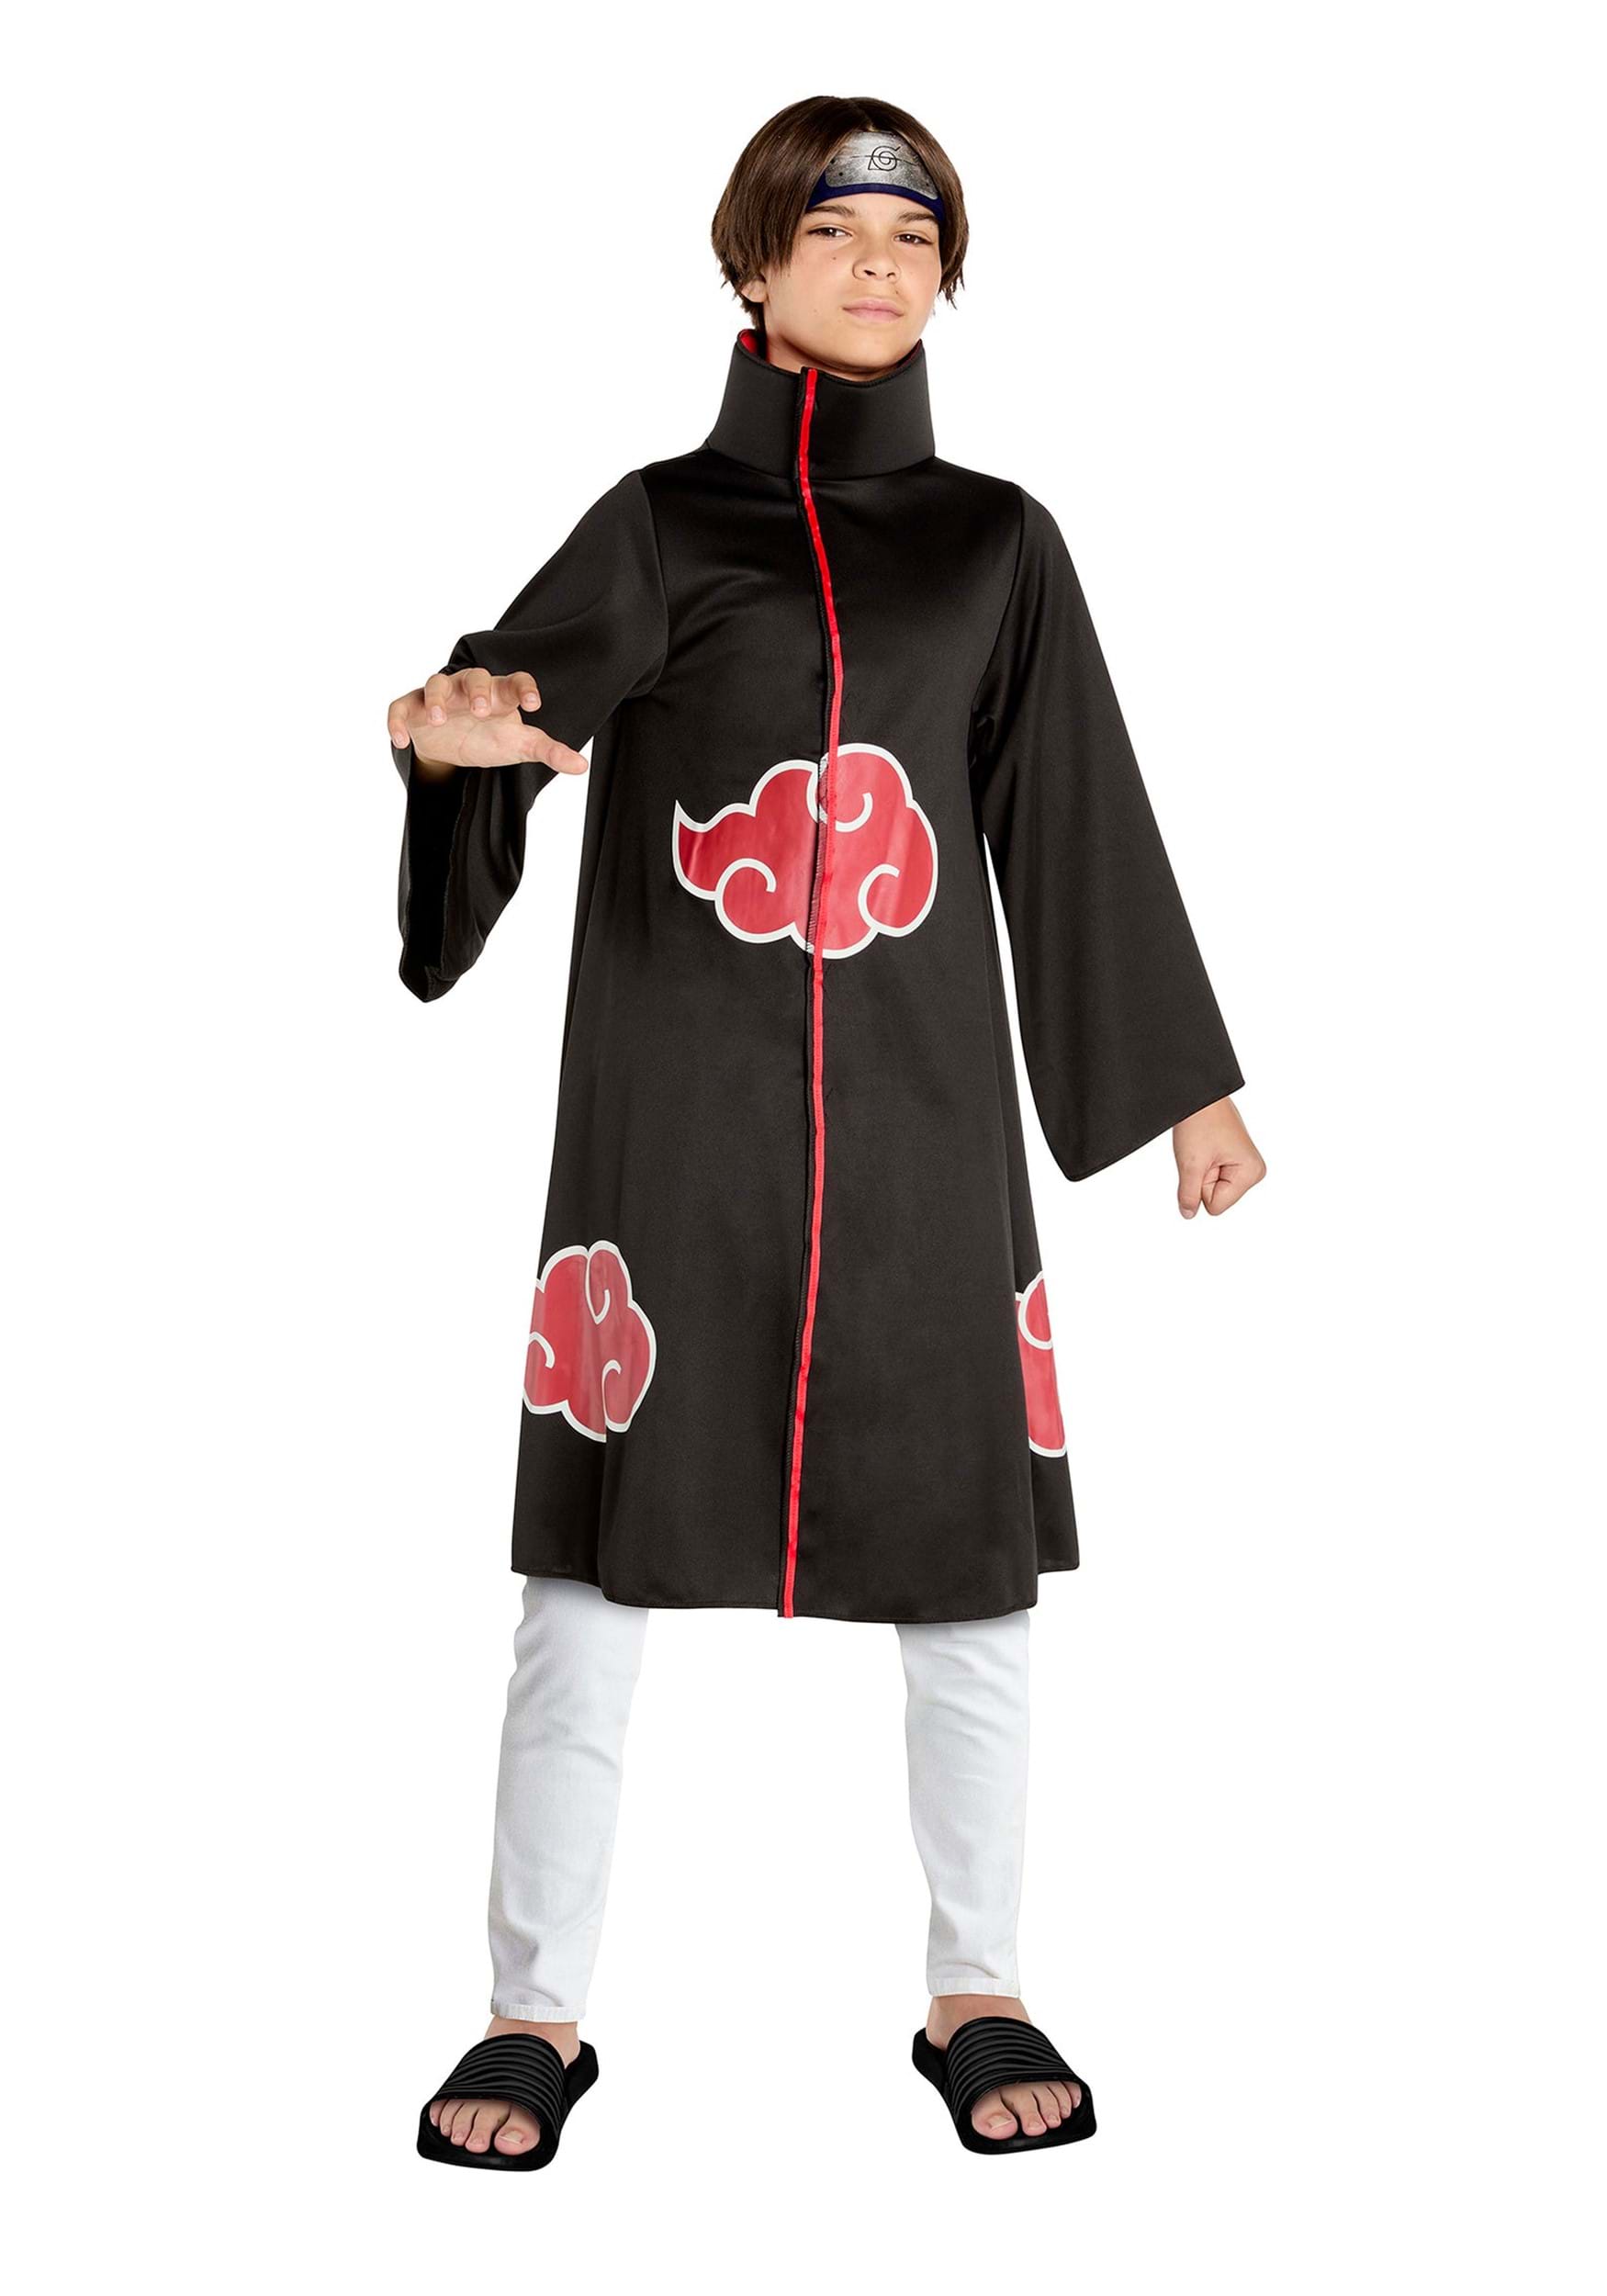 Naruto Shippuden Akatsuki Child's Costume